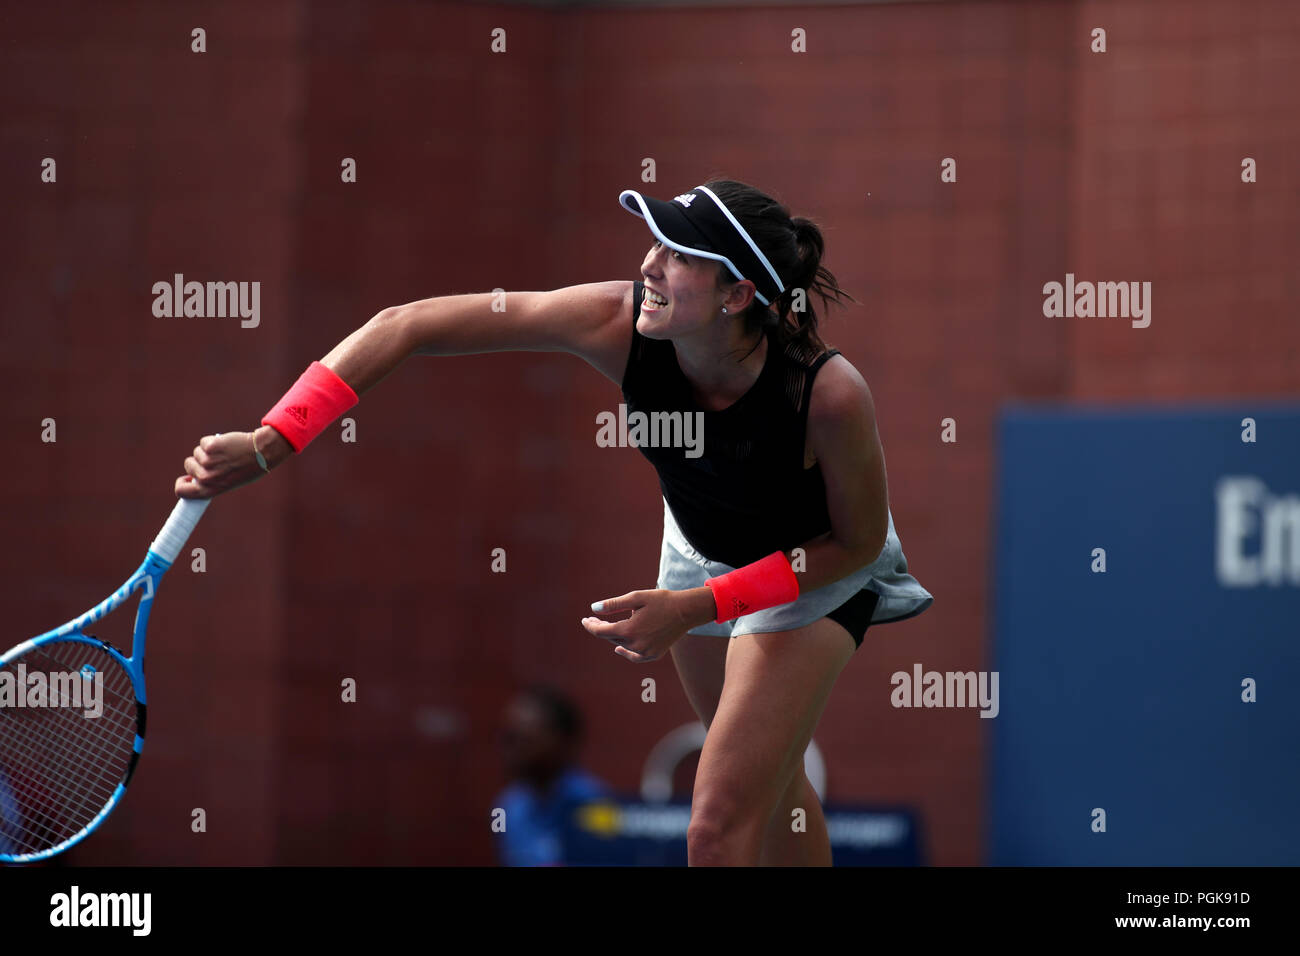 Garabine muguruza tennis hi-res stock photography and images - Alamy